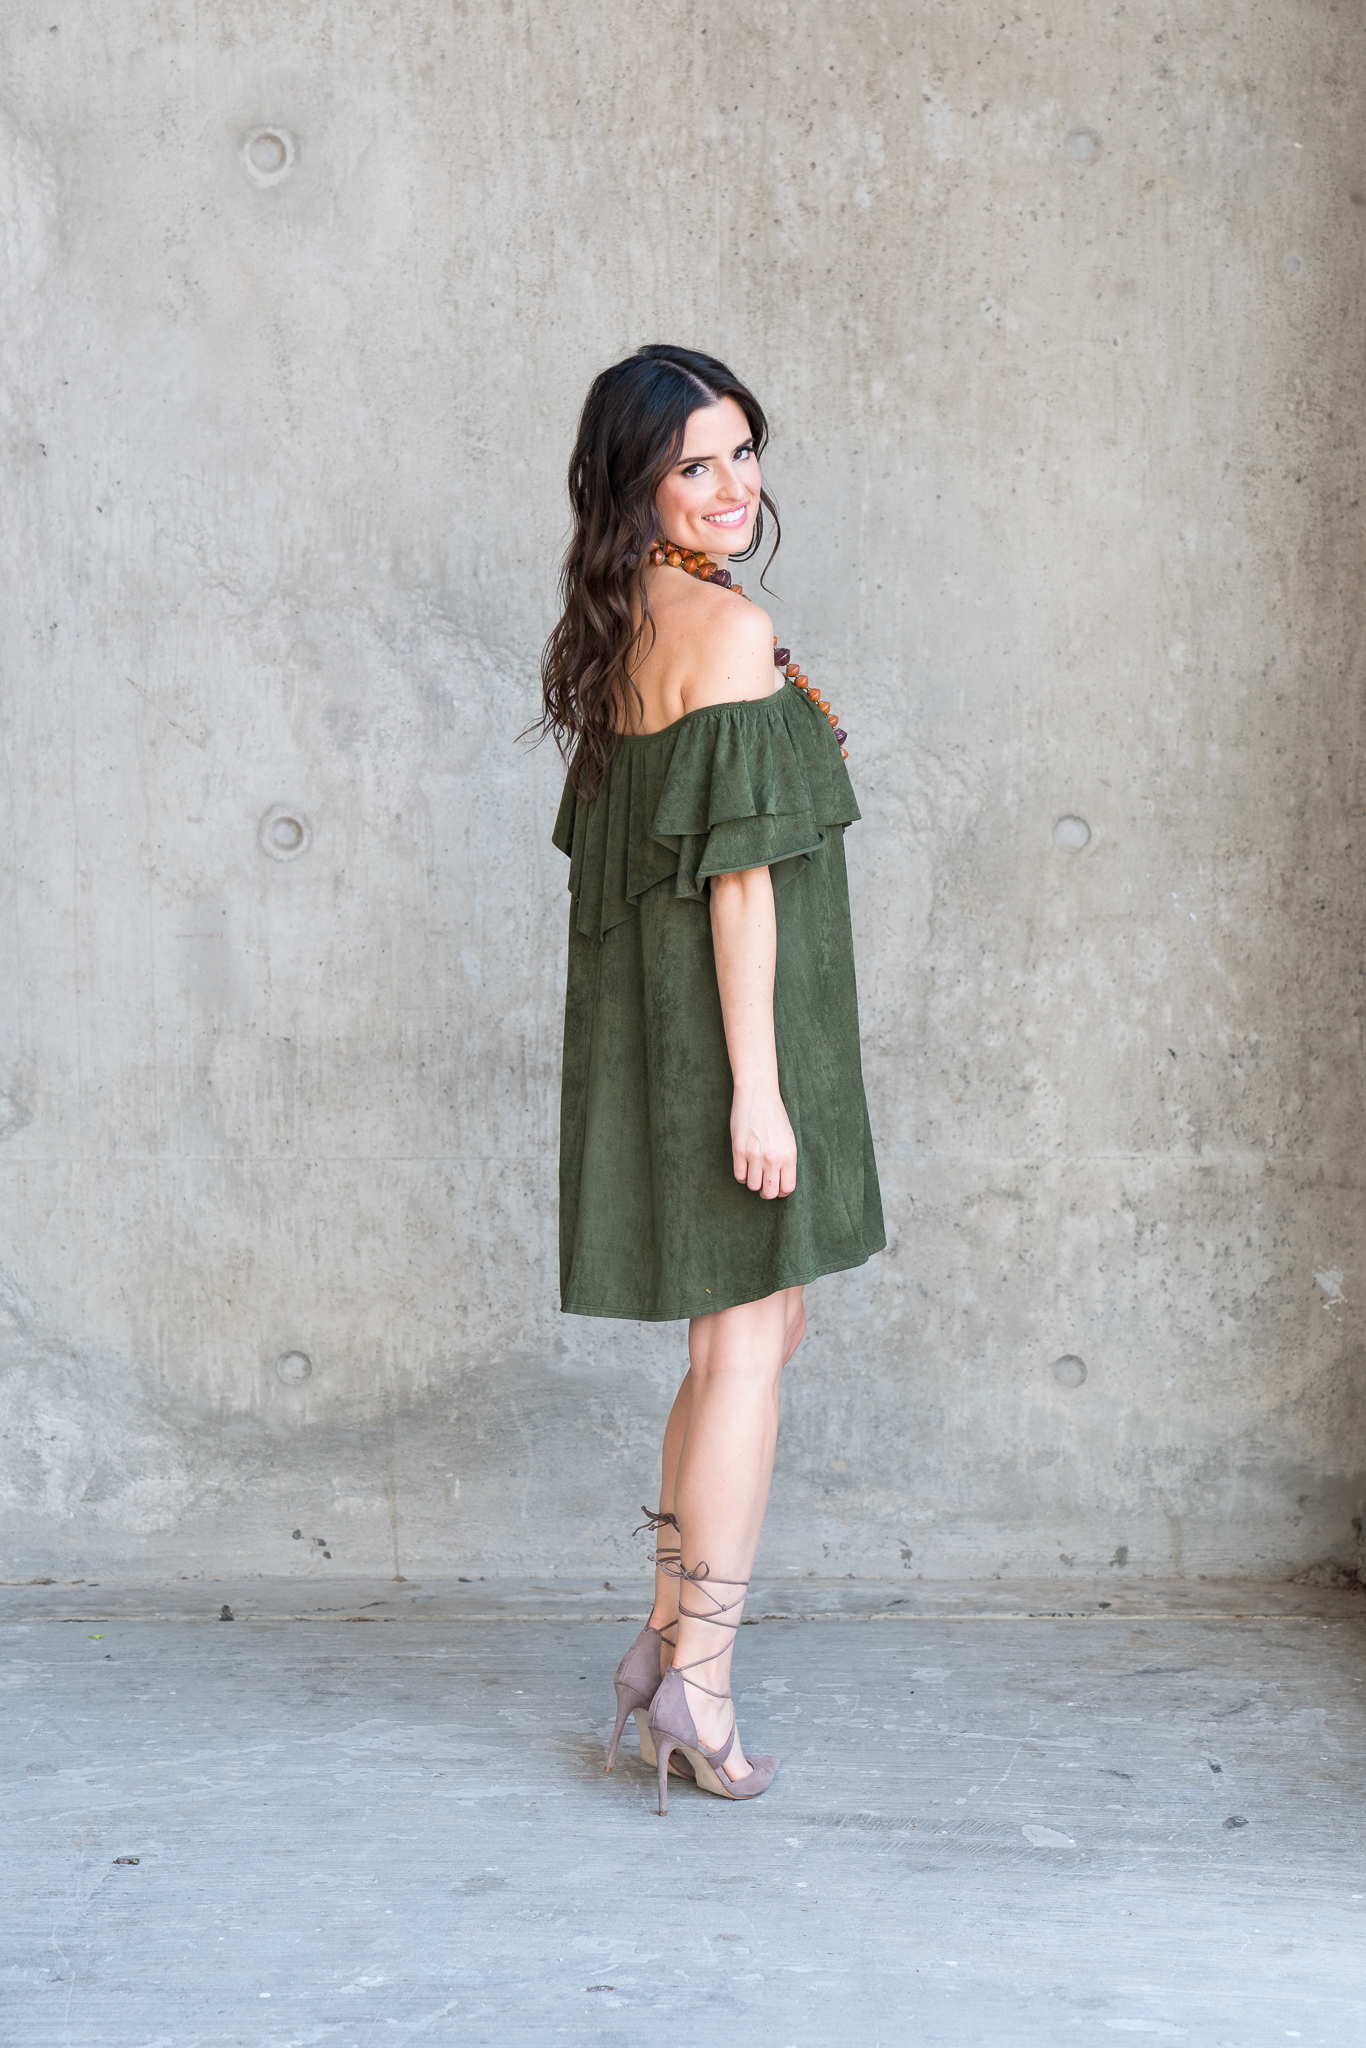 green-dress-austin-blogger-lace-up-heel